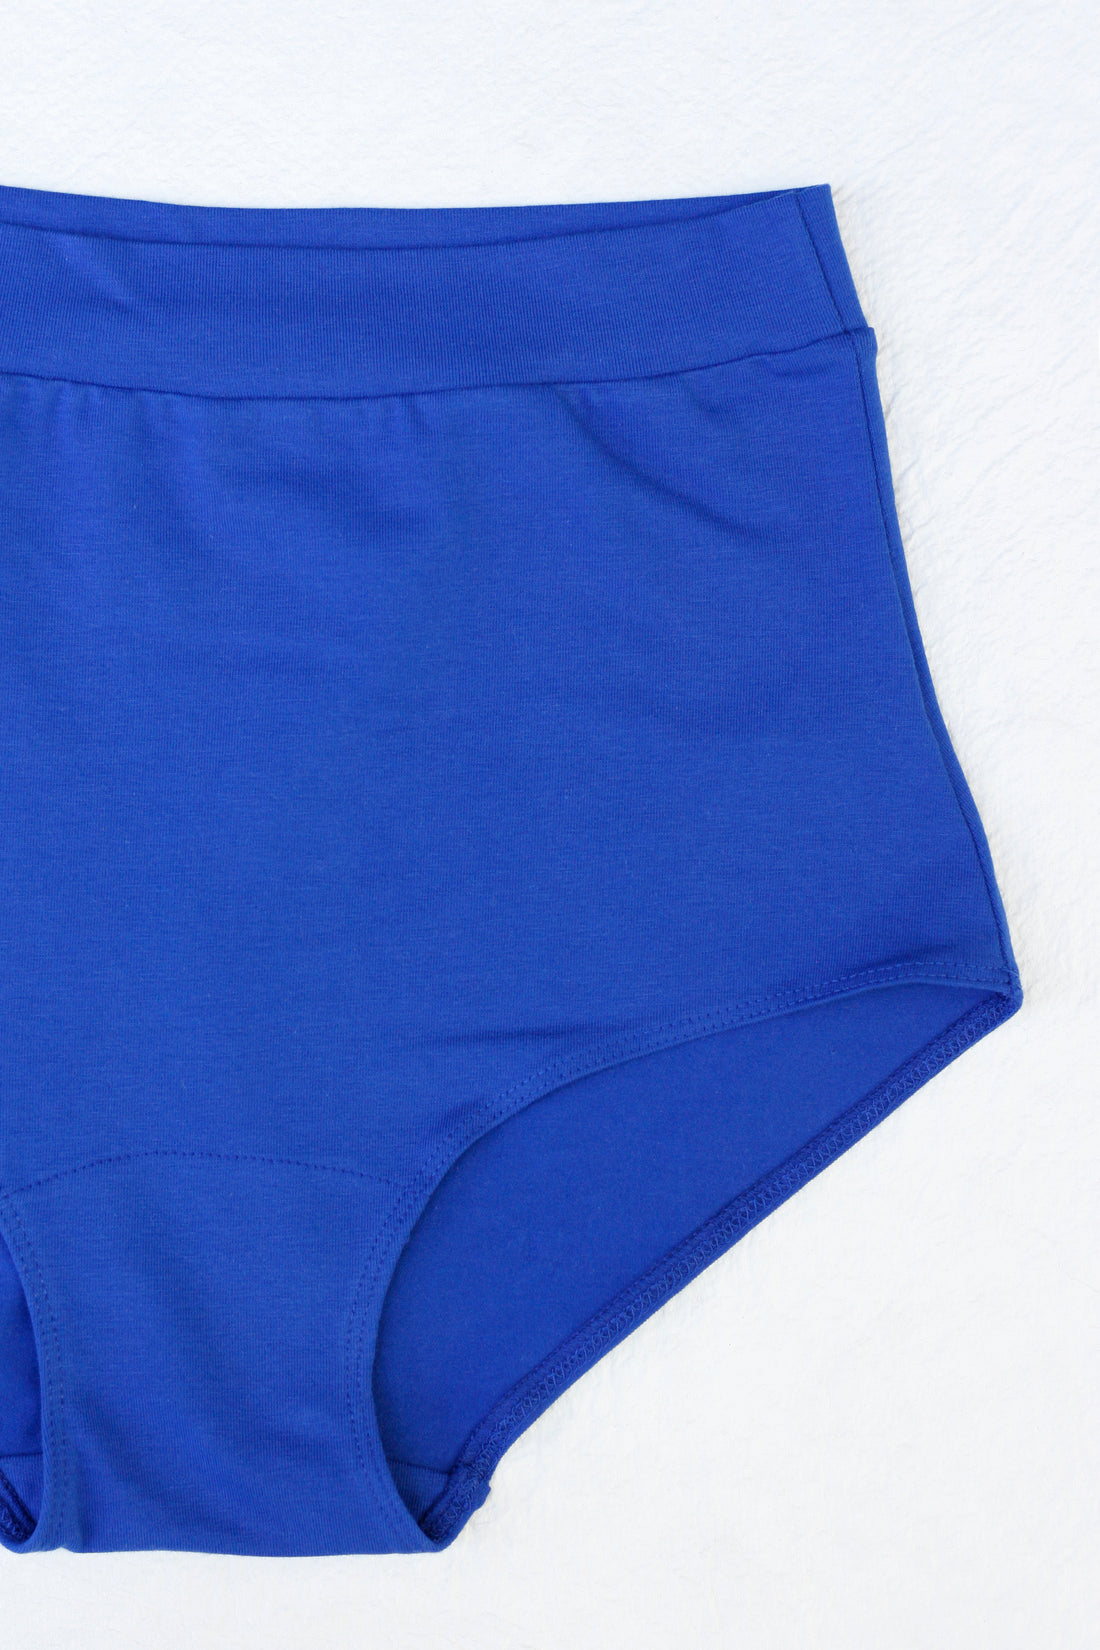 High Waist Panties Underpants Size 10 Panties Royal Blue Lace